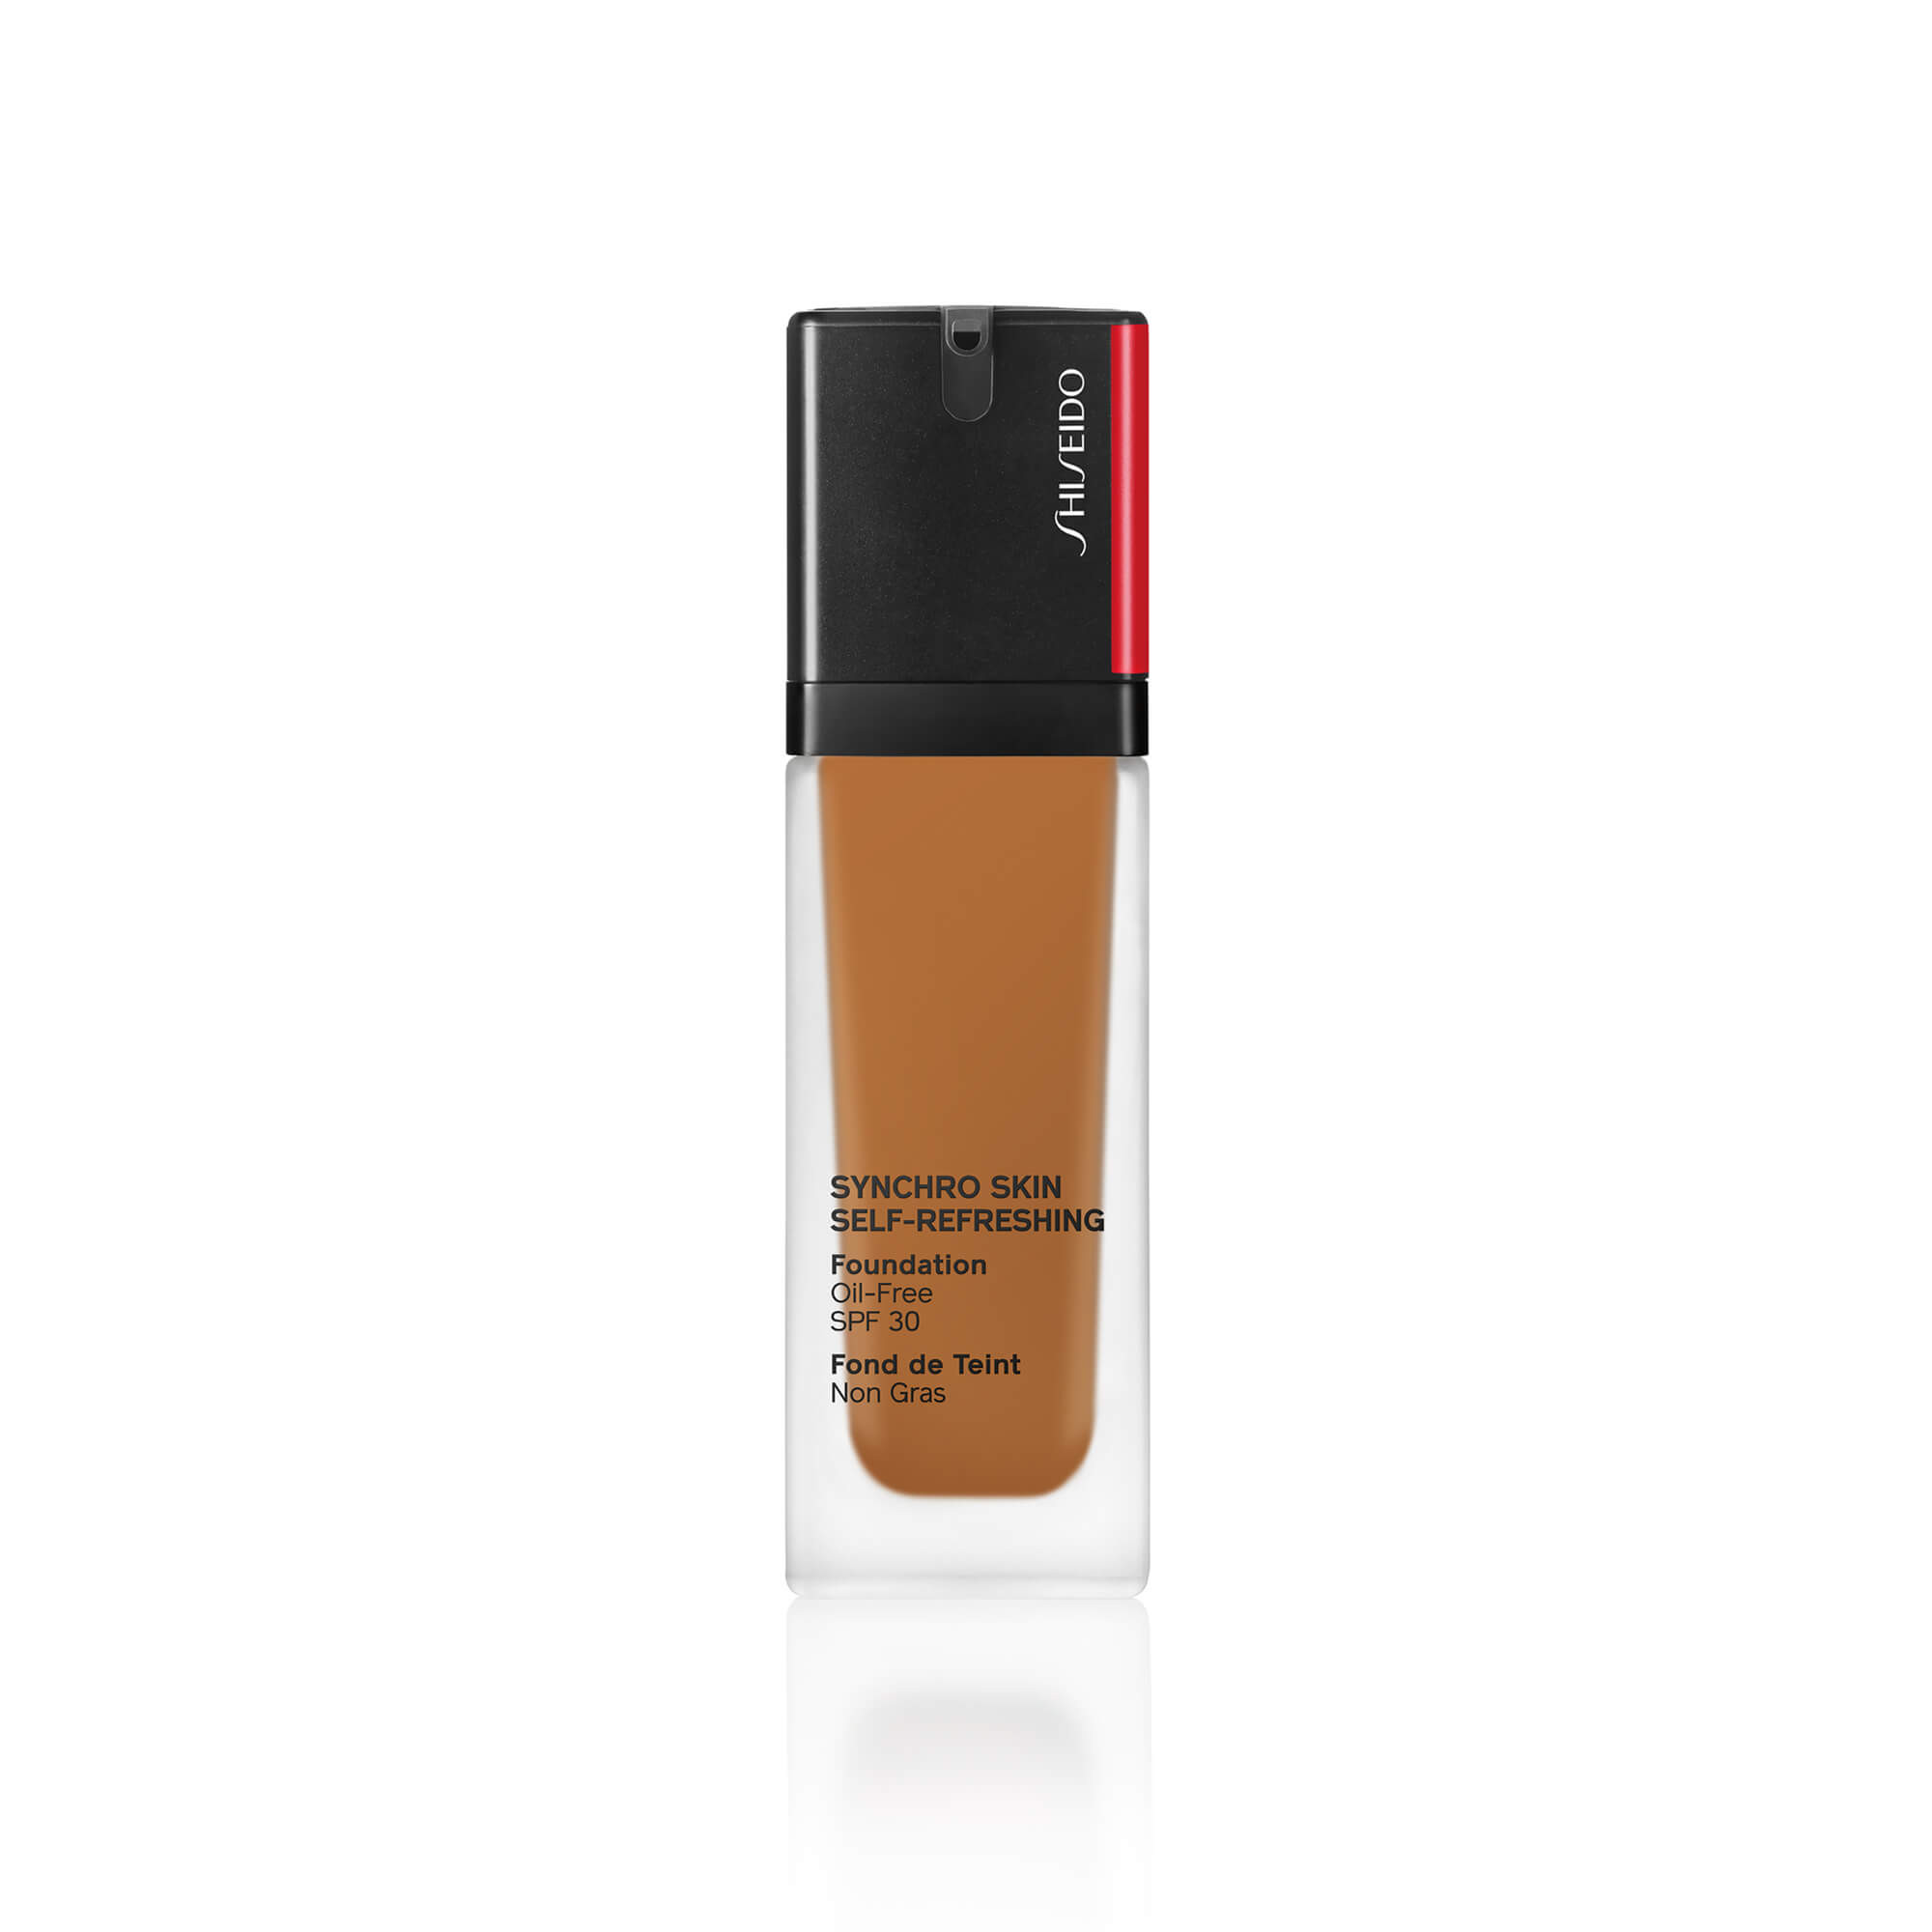 Shiseido Teint Synchro Skin Self-Refreshing Foundation 